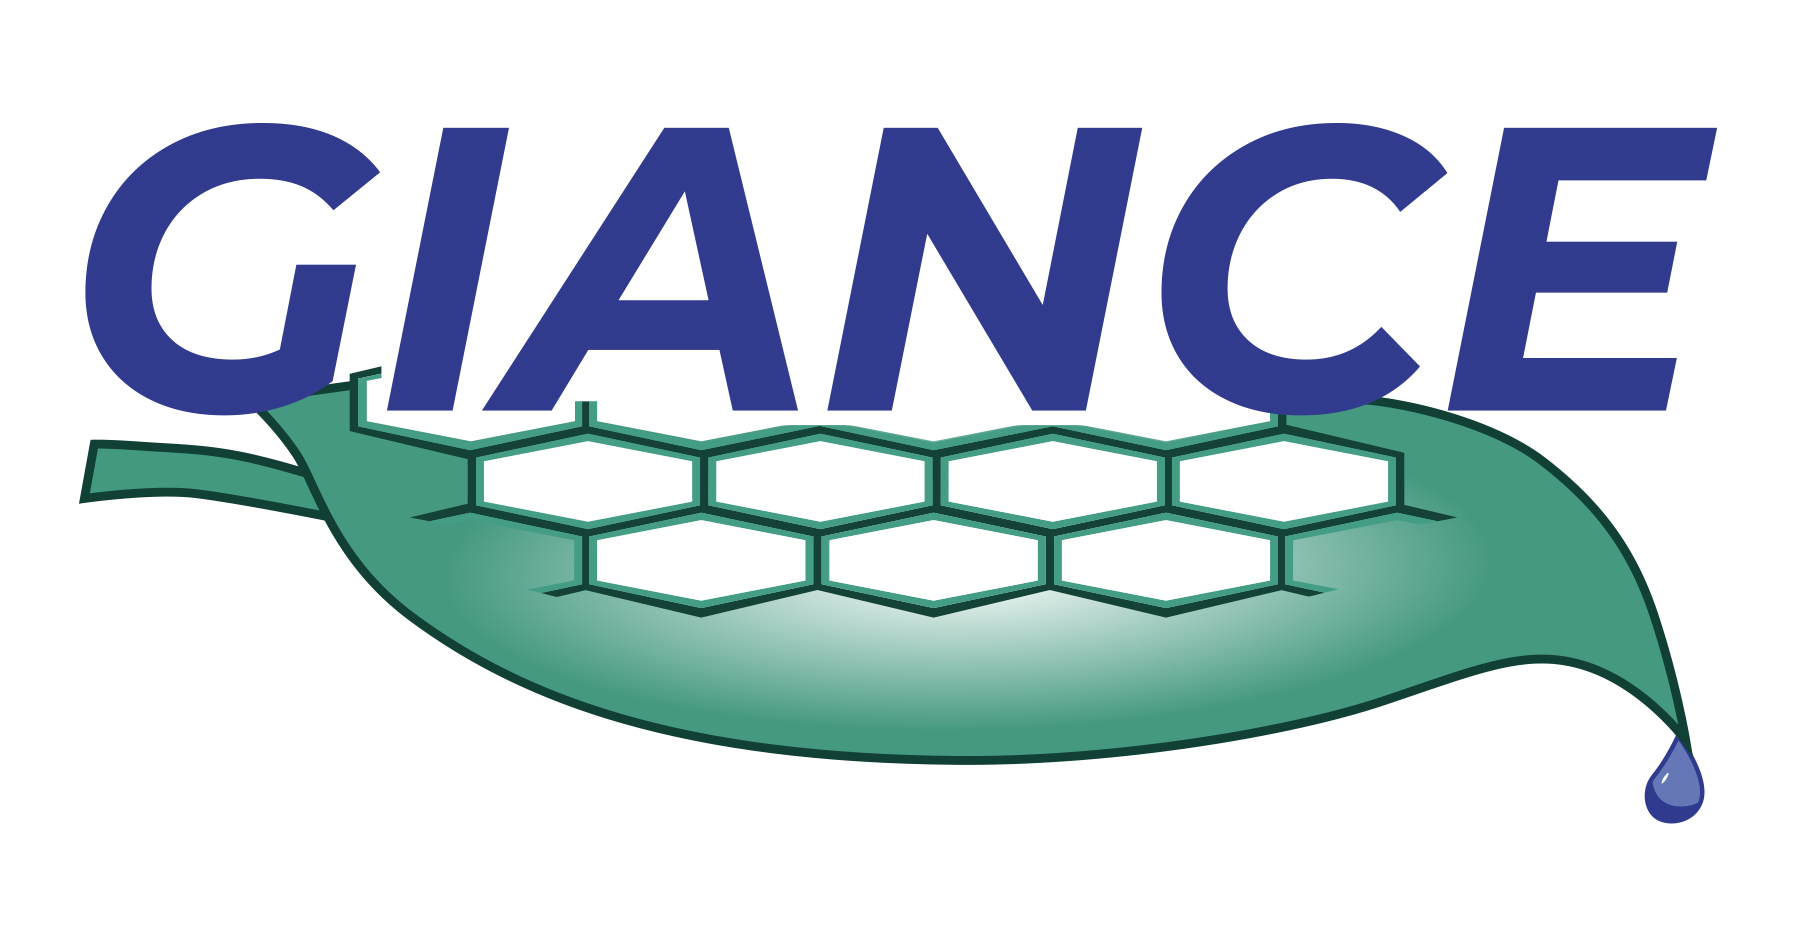 GIANCE logo